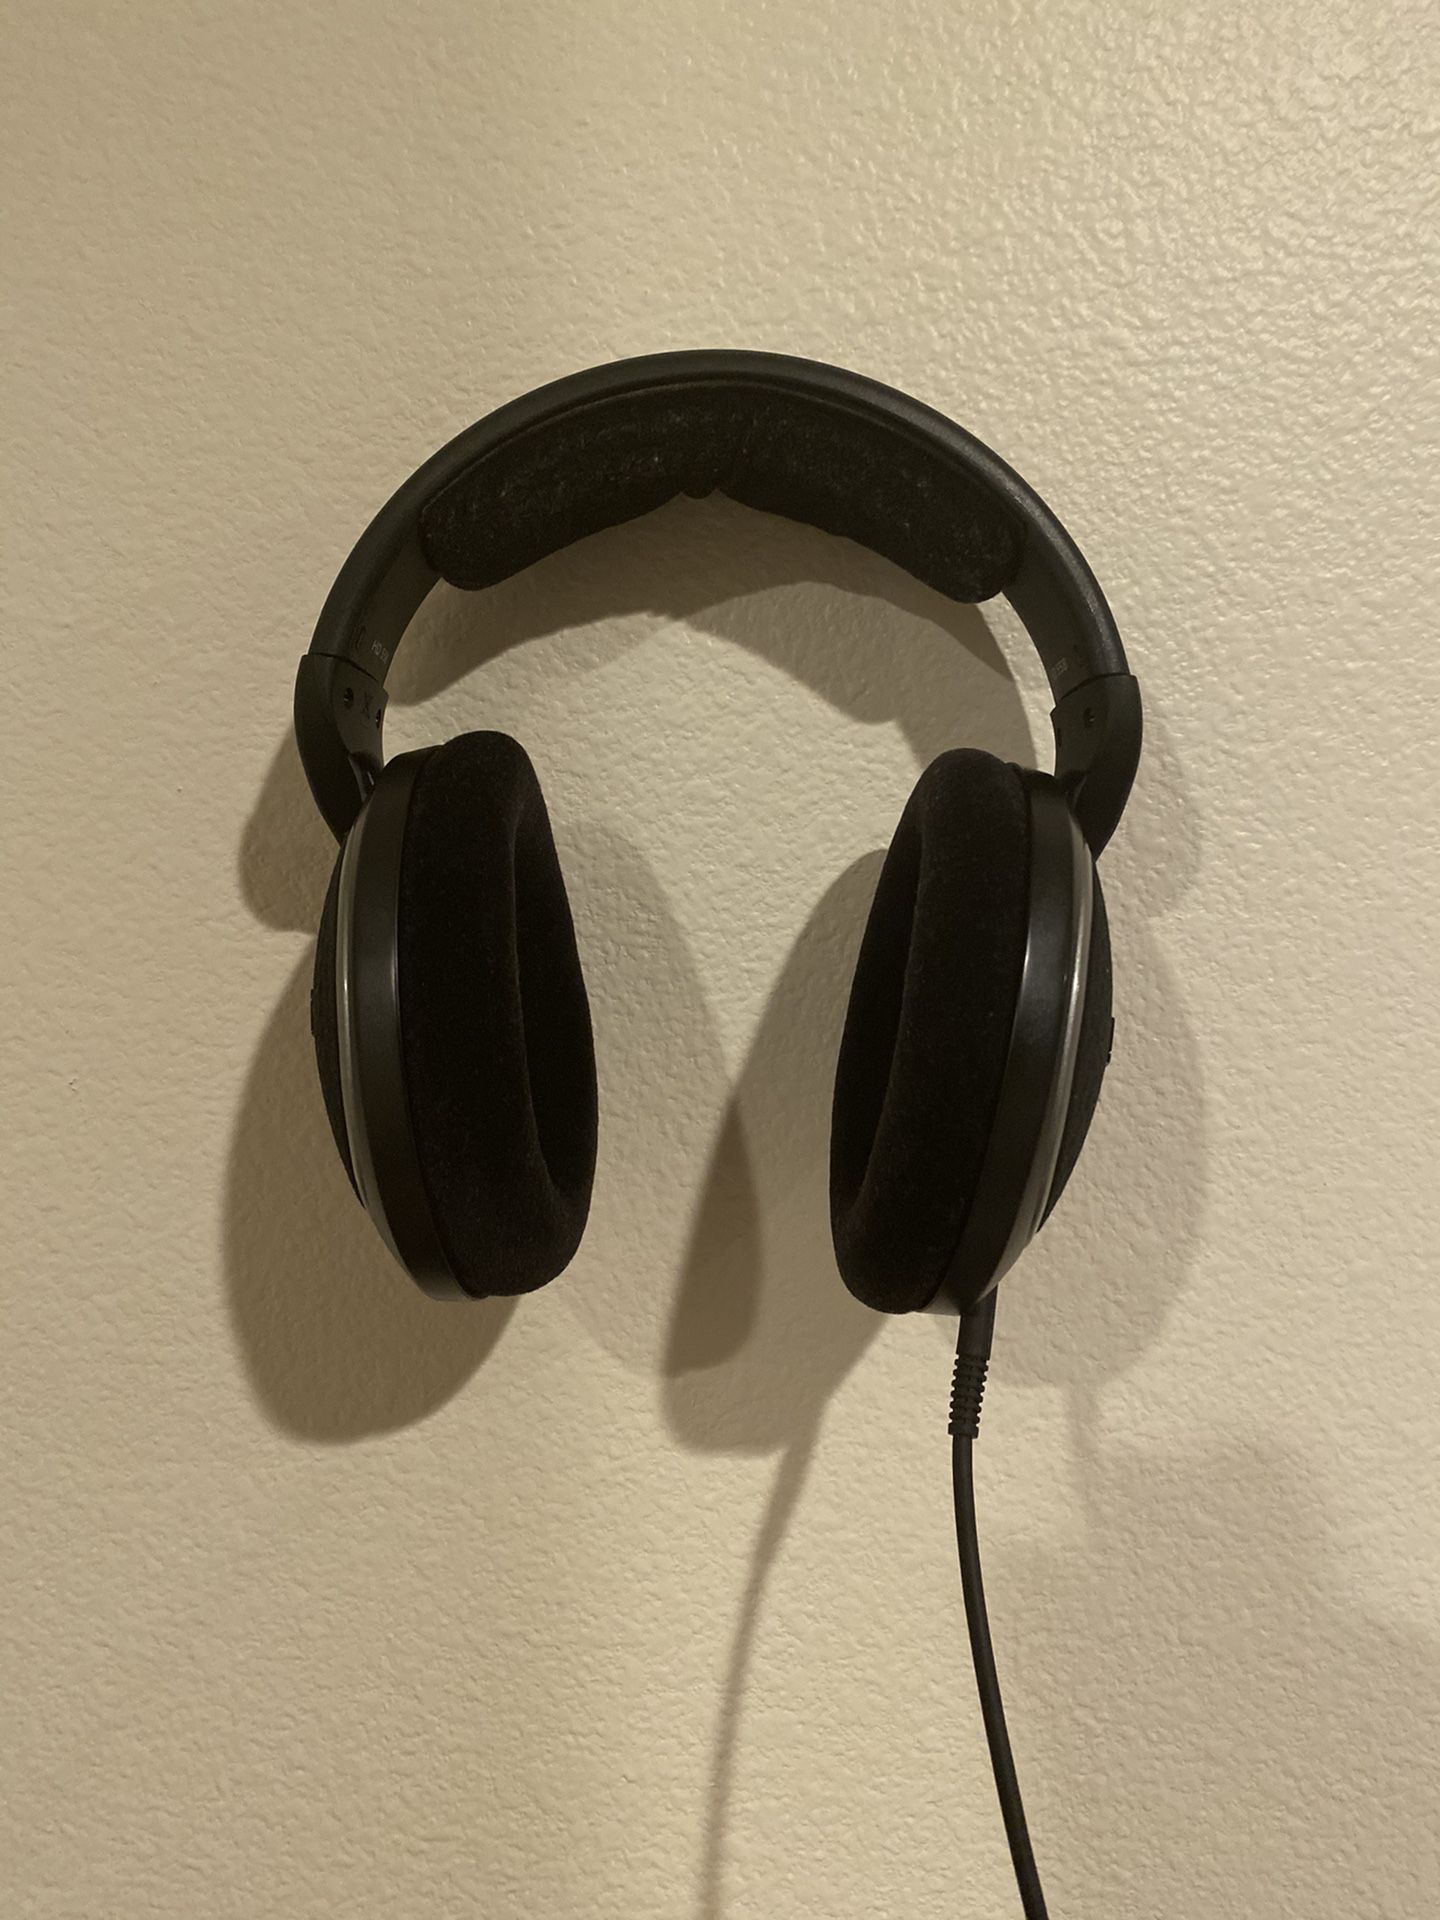 Sennheiser HD 558 Corded Headphones